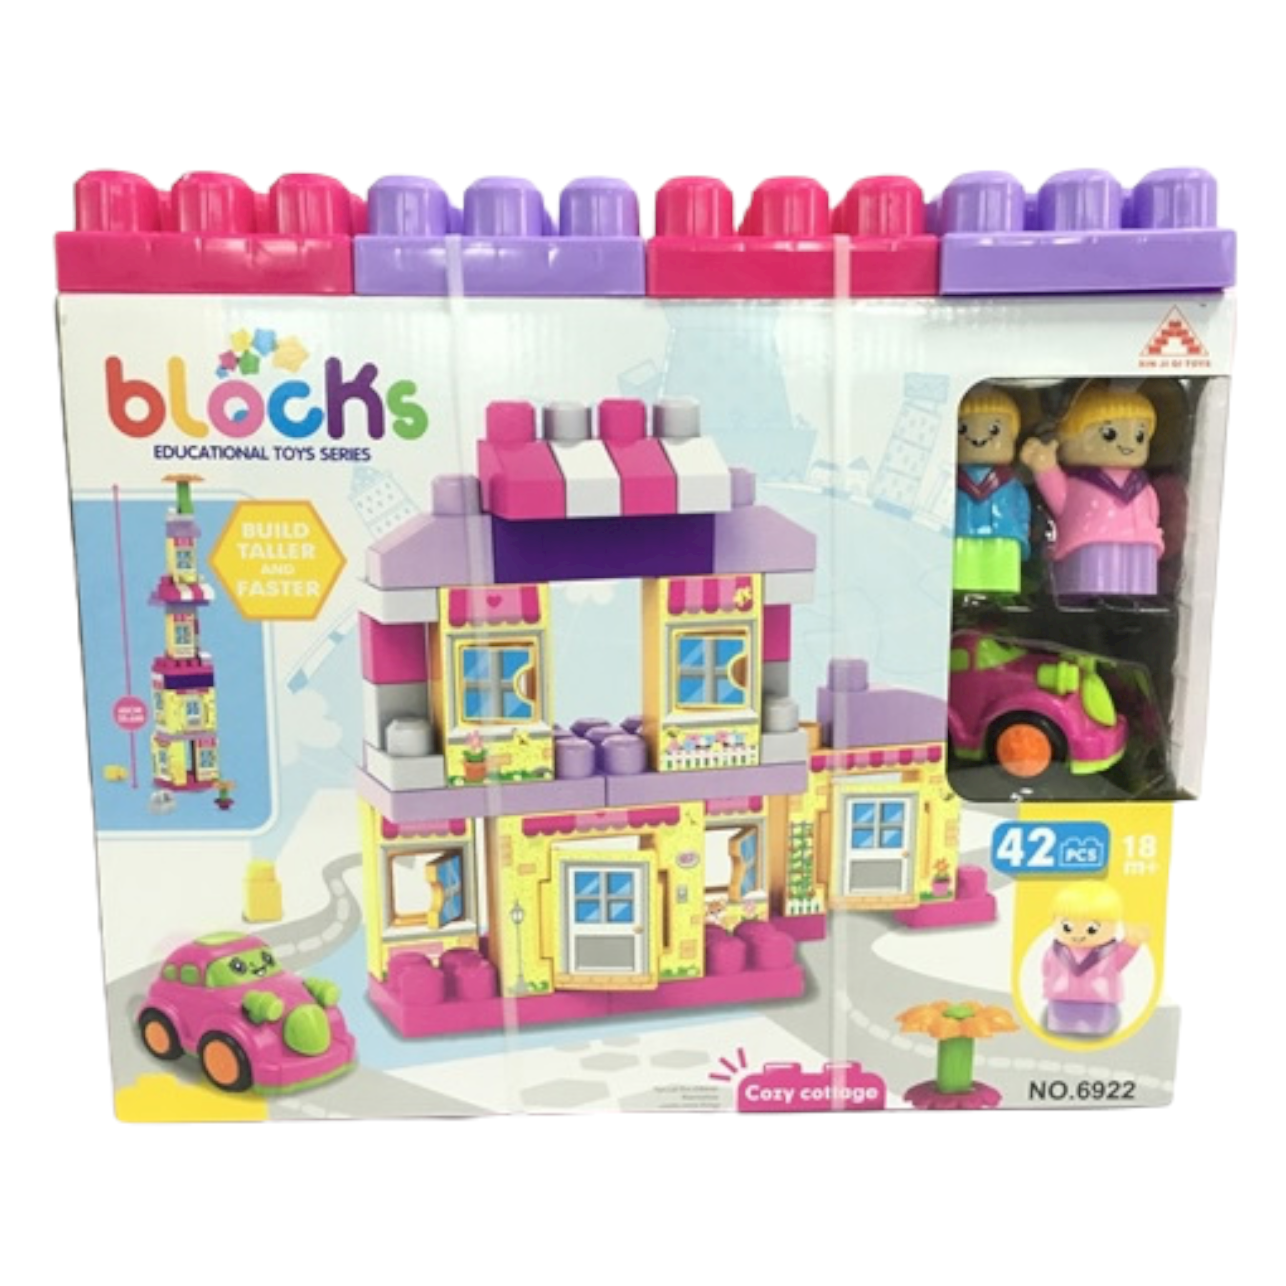 Educational Building Blocks Toy Series - 42 Pcs